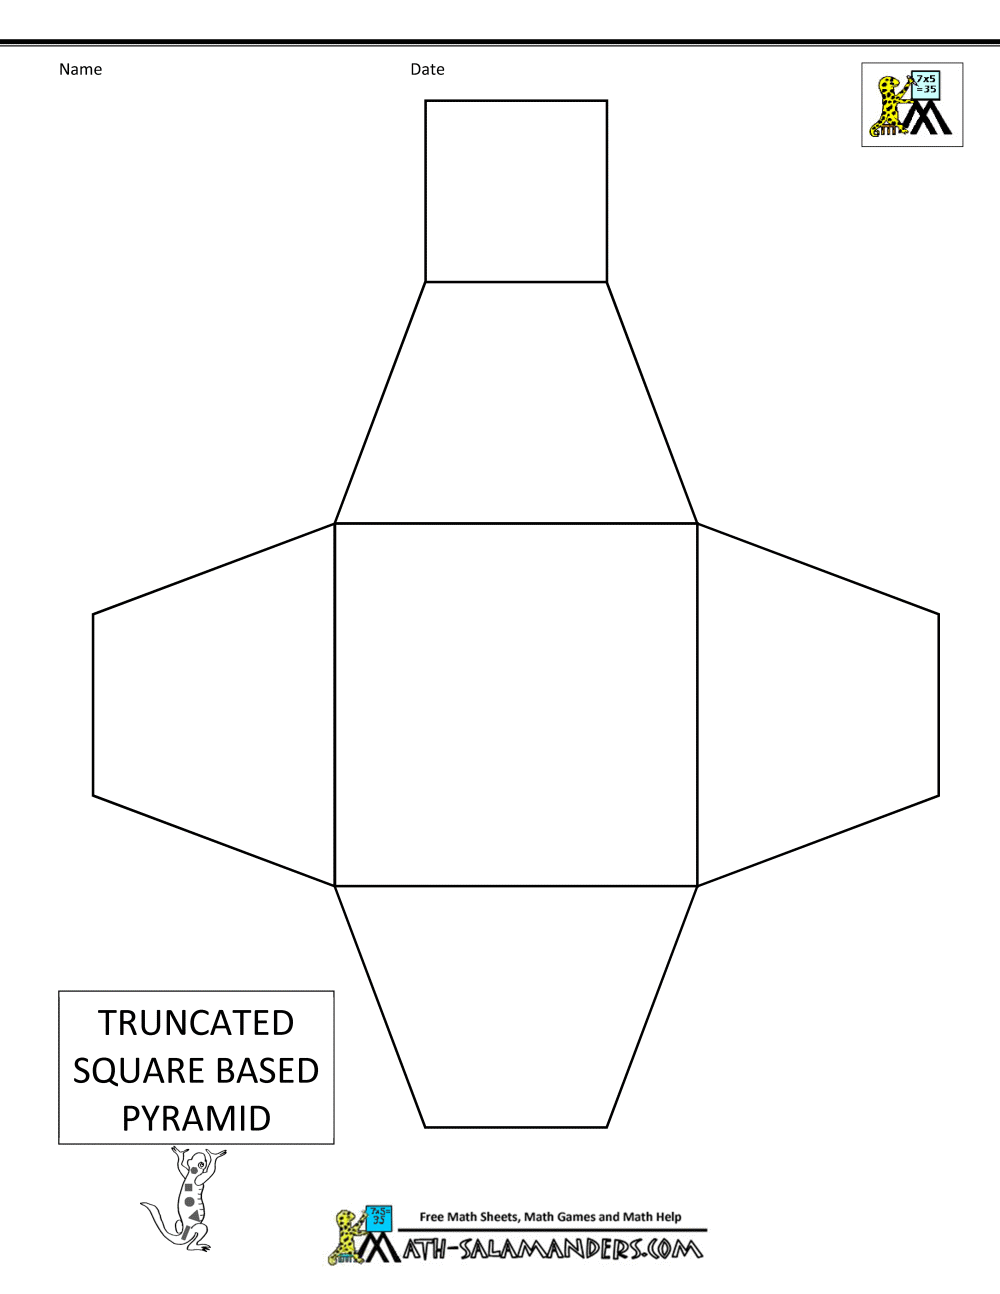 Square Pyramid Clip Art Square Based Pyramid